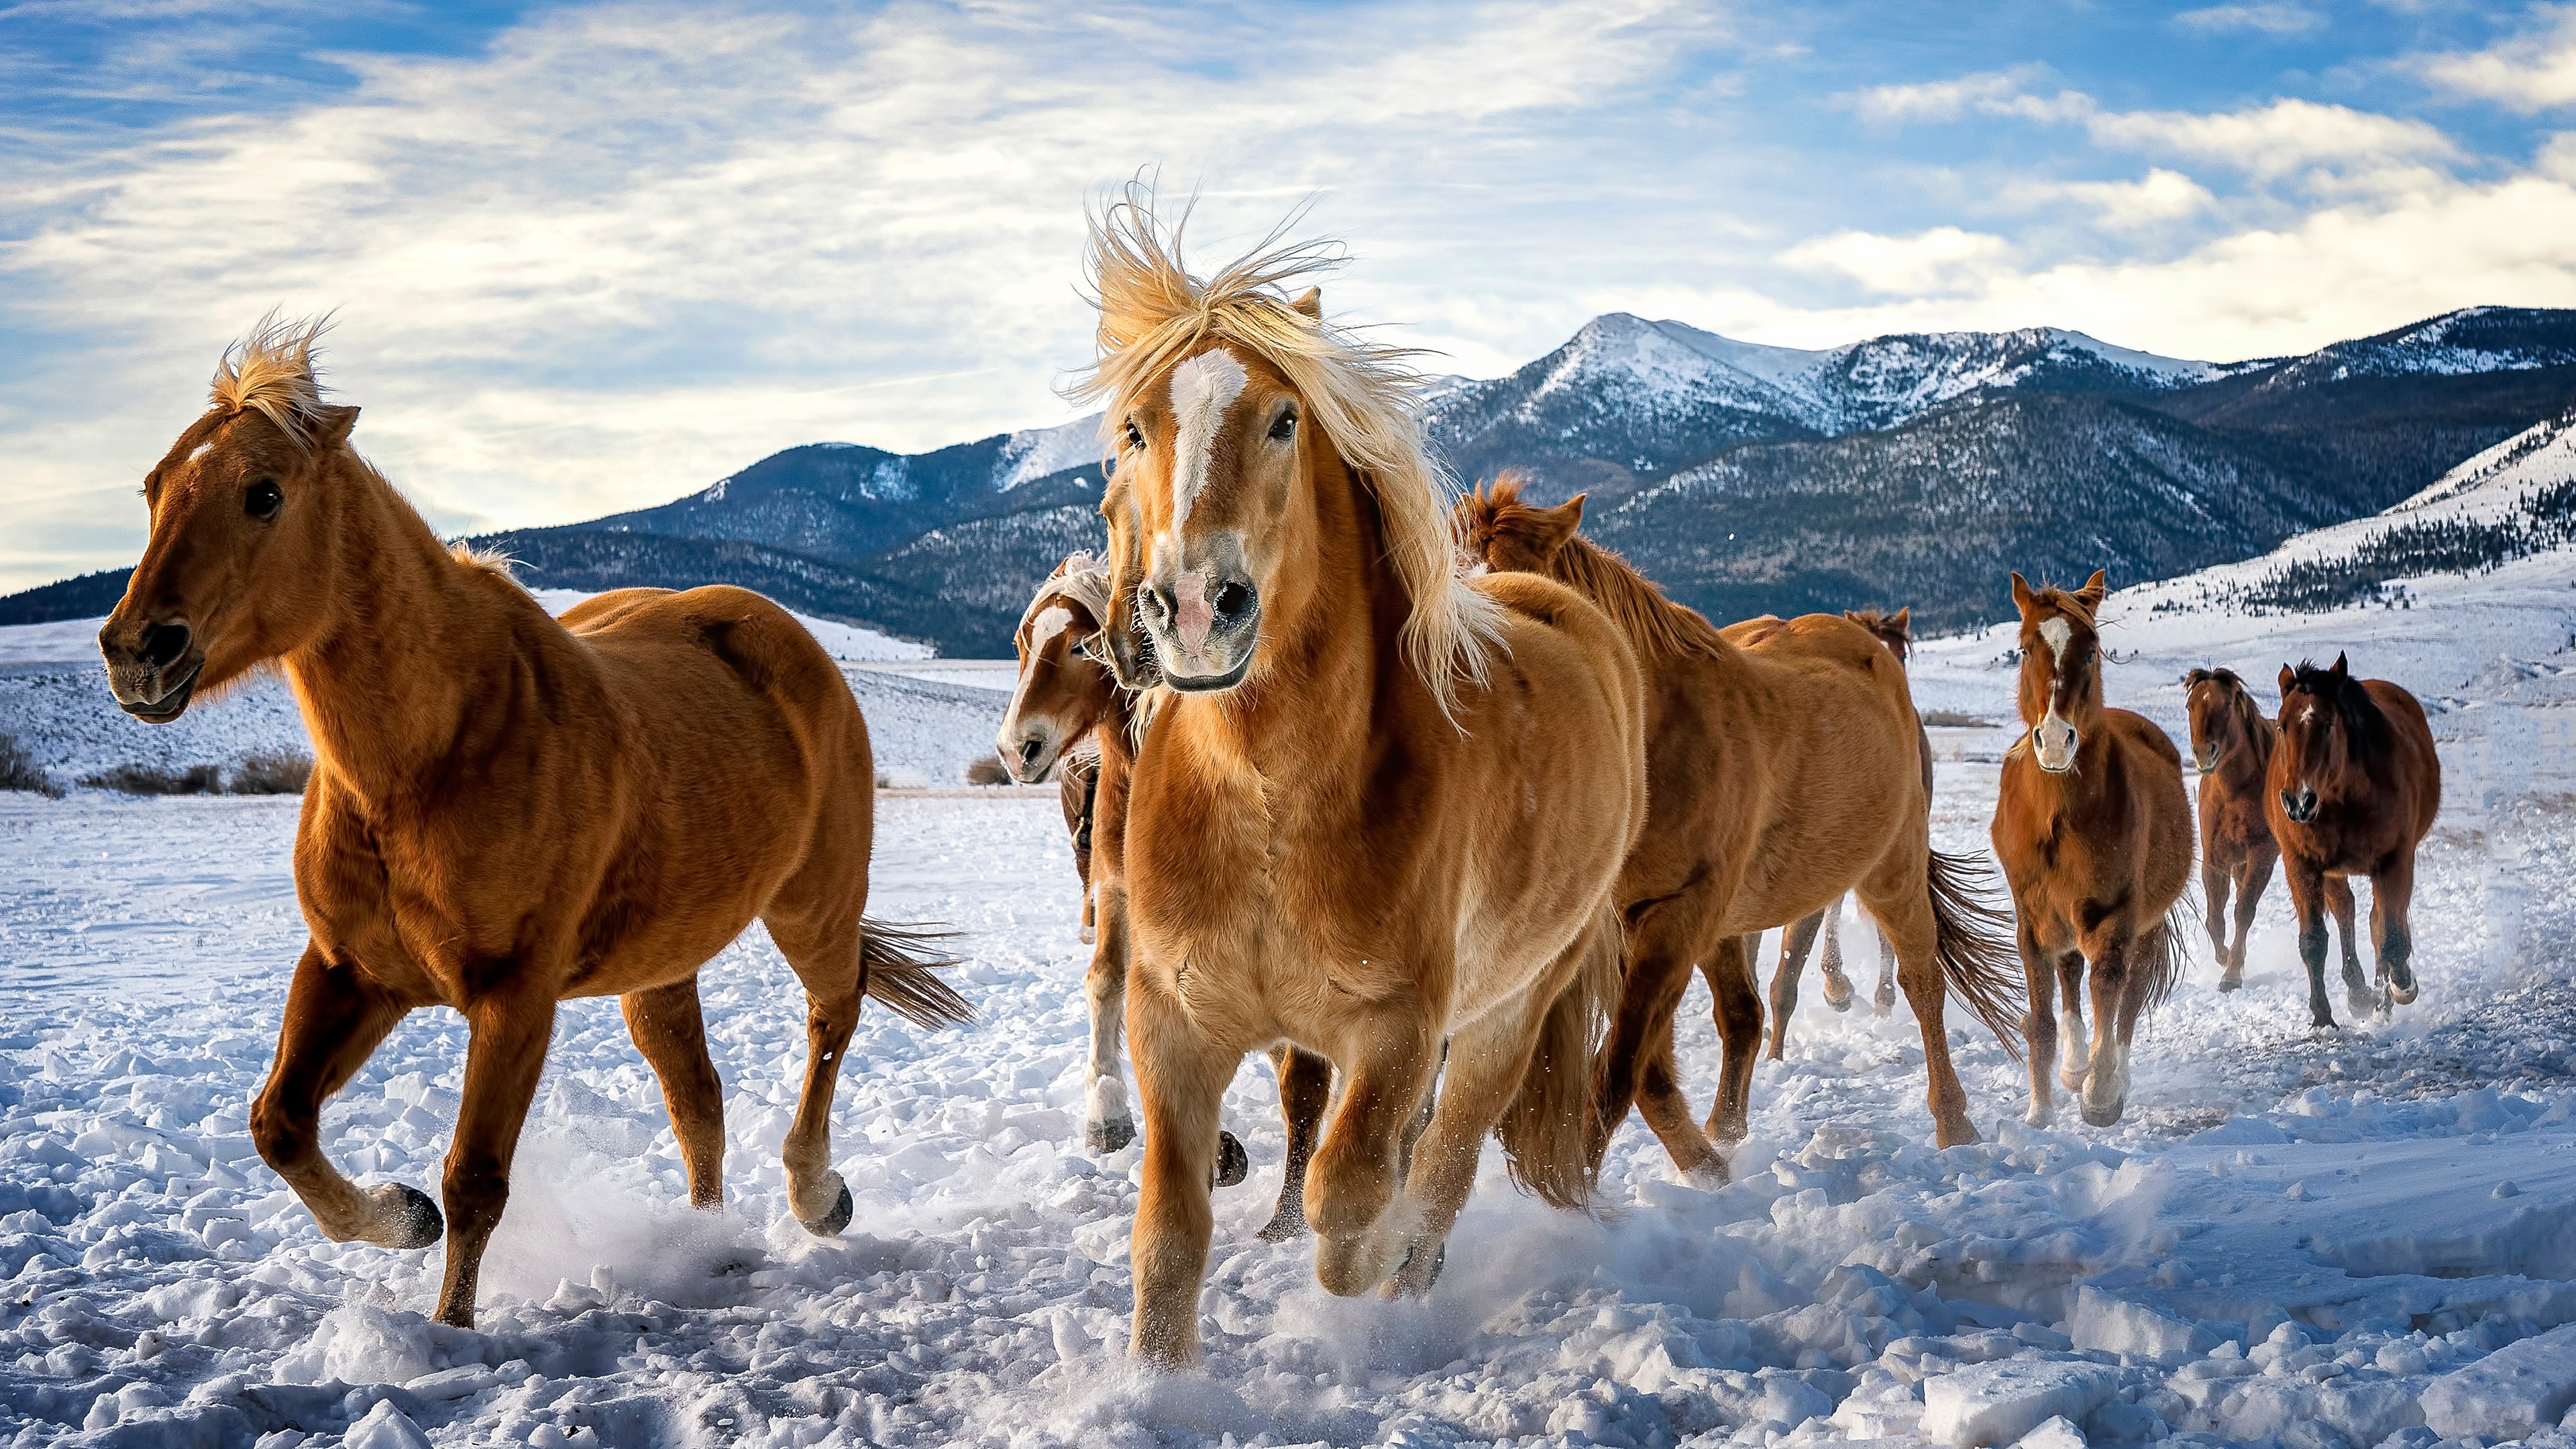 Majestic horses, Snowy wonderland, Graceful in white, Winter tranquility, 3840x2160 4K Desktop